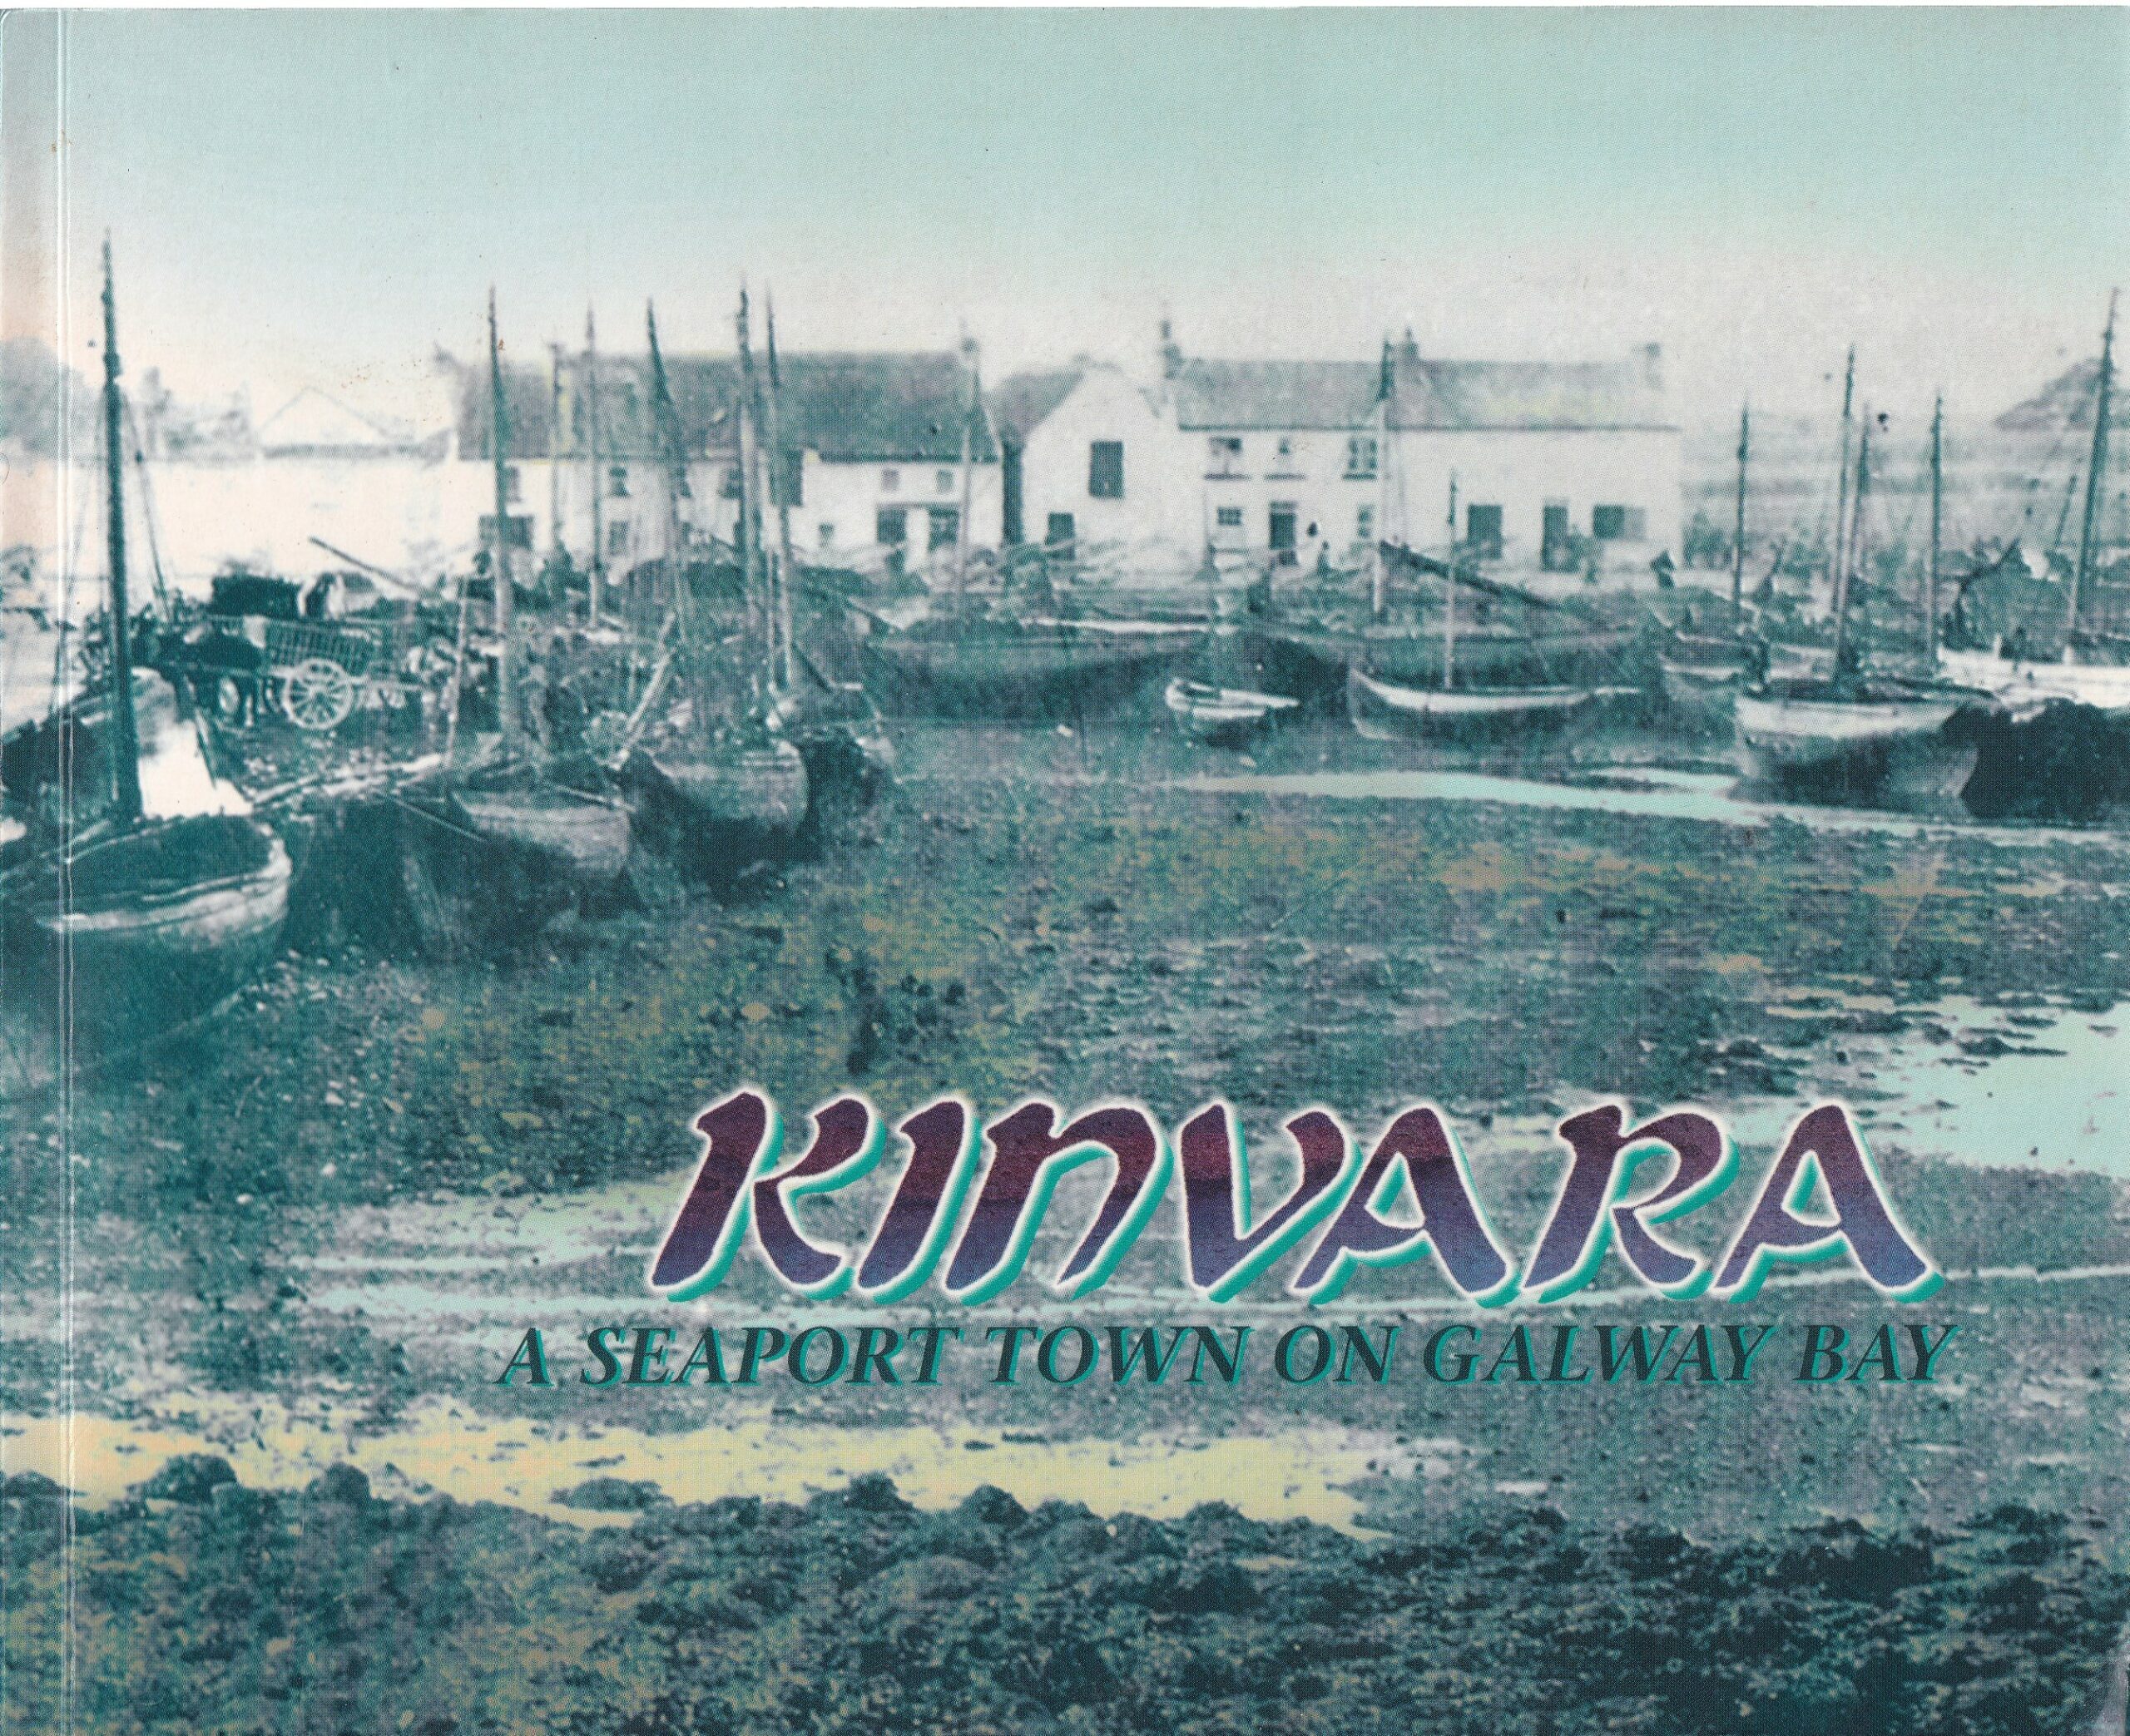 Kinvara: A Seaport Town on Galway Bay | Caoilte Nreatnach, | Charlie Byrne's